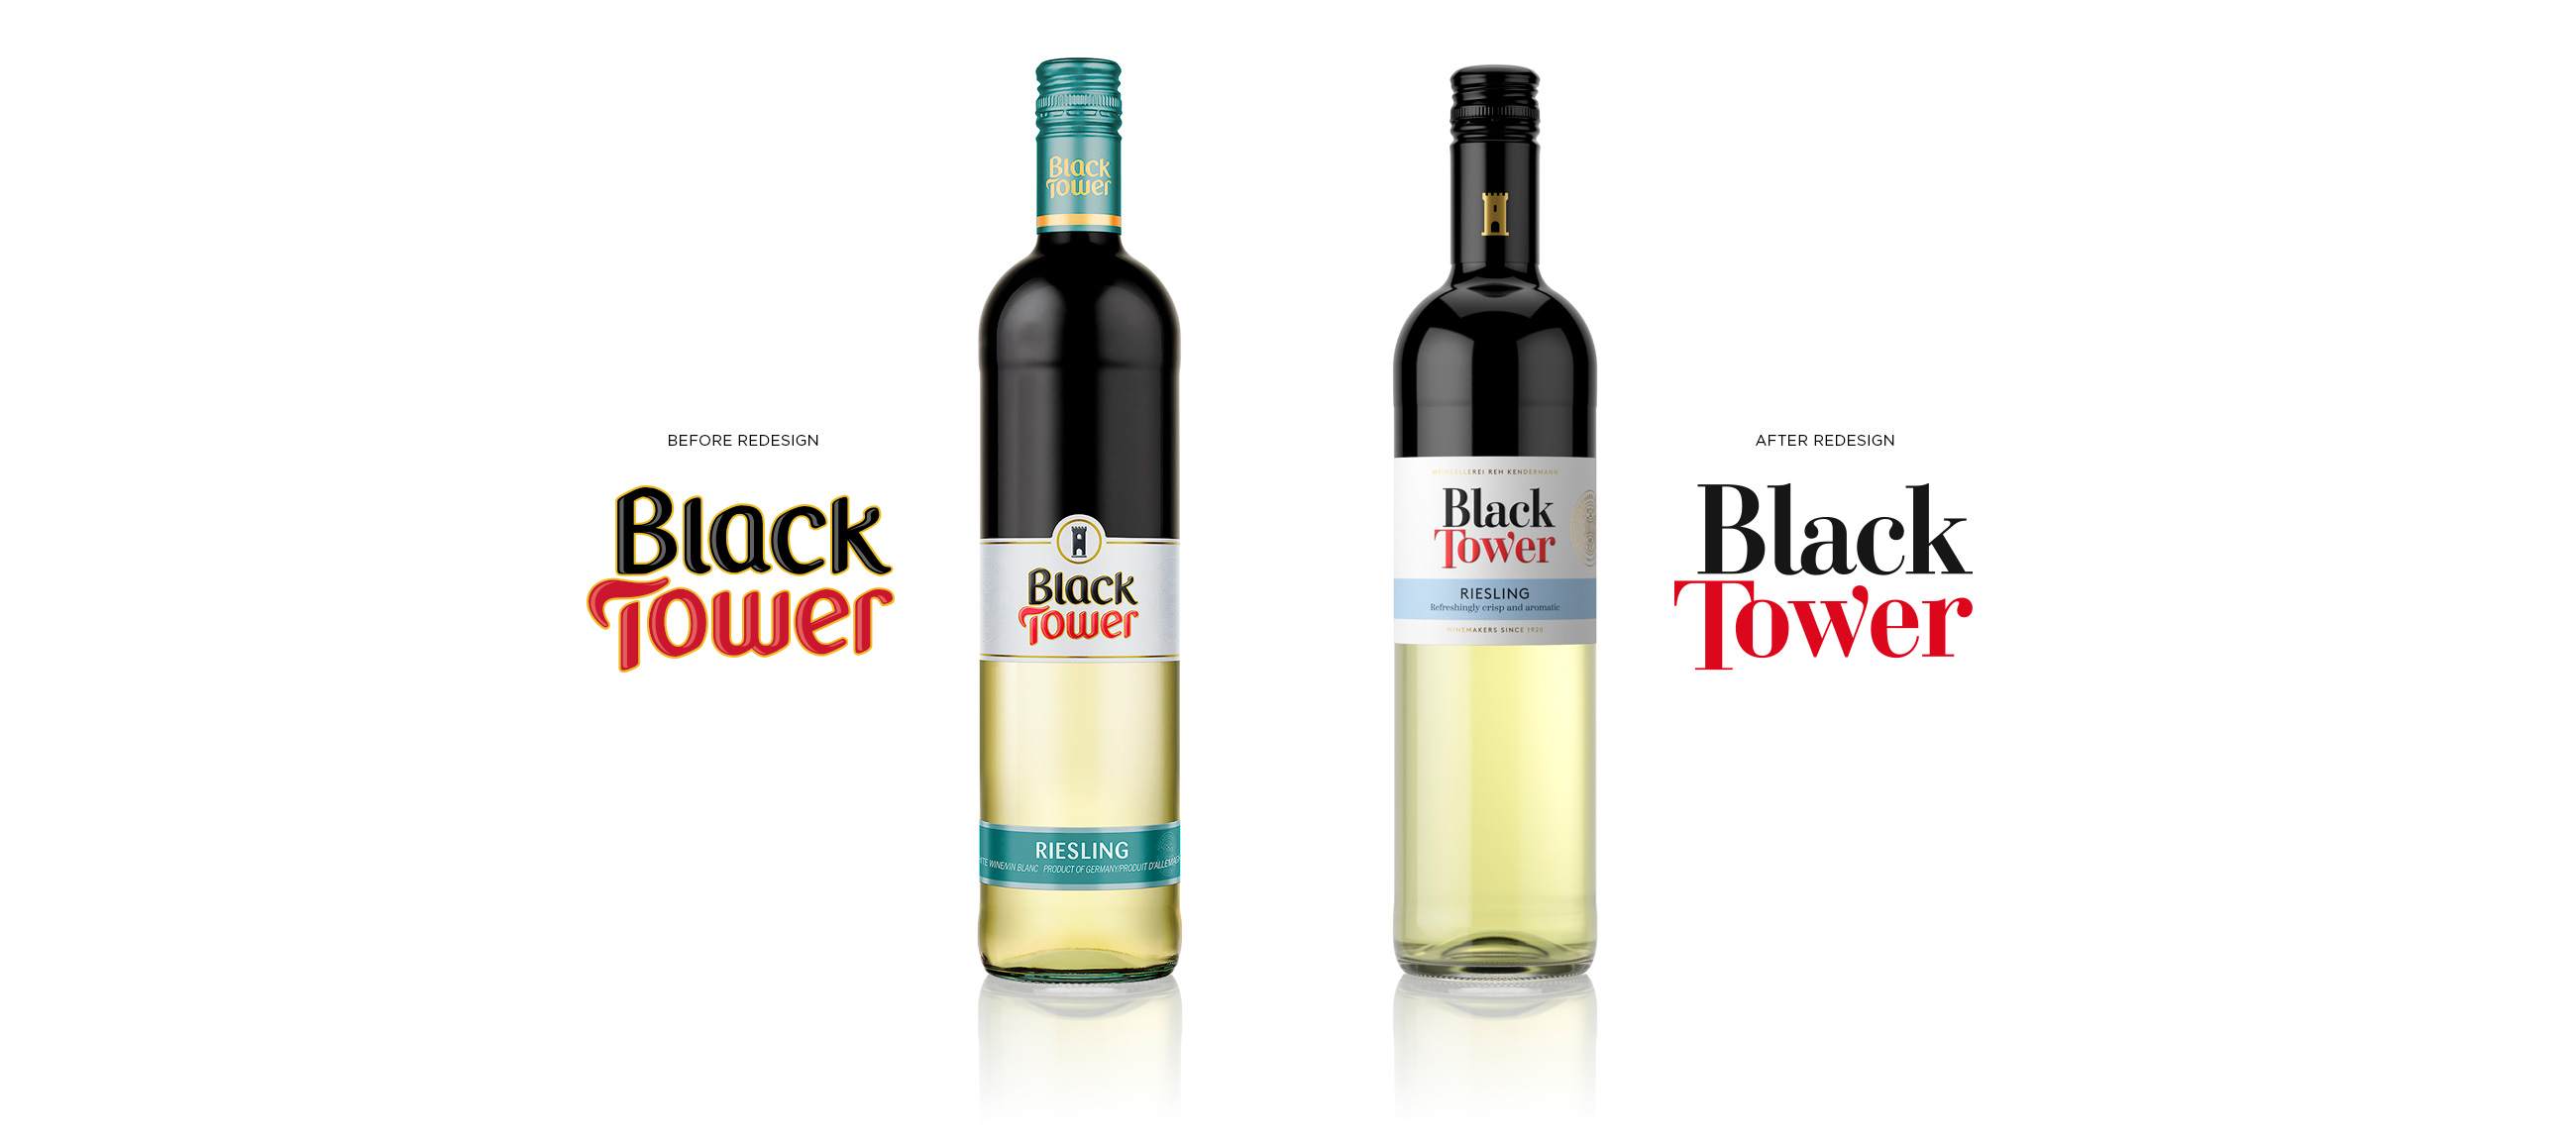 Black Tower old versus new logo and packaging bottle design